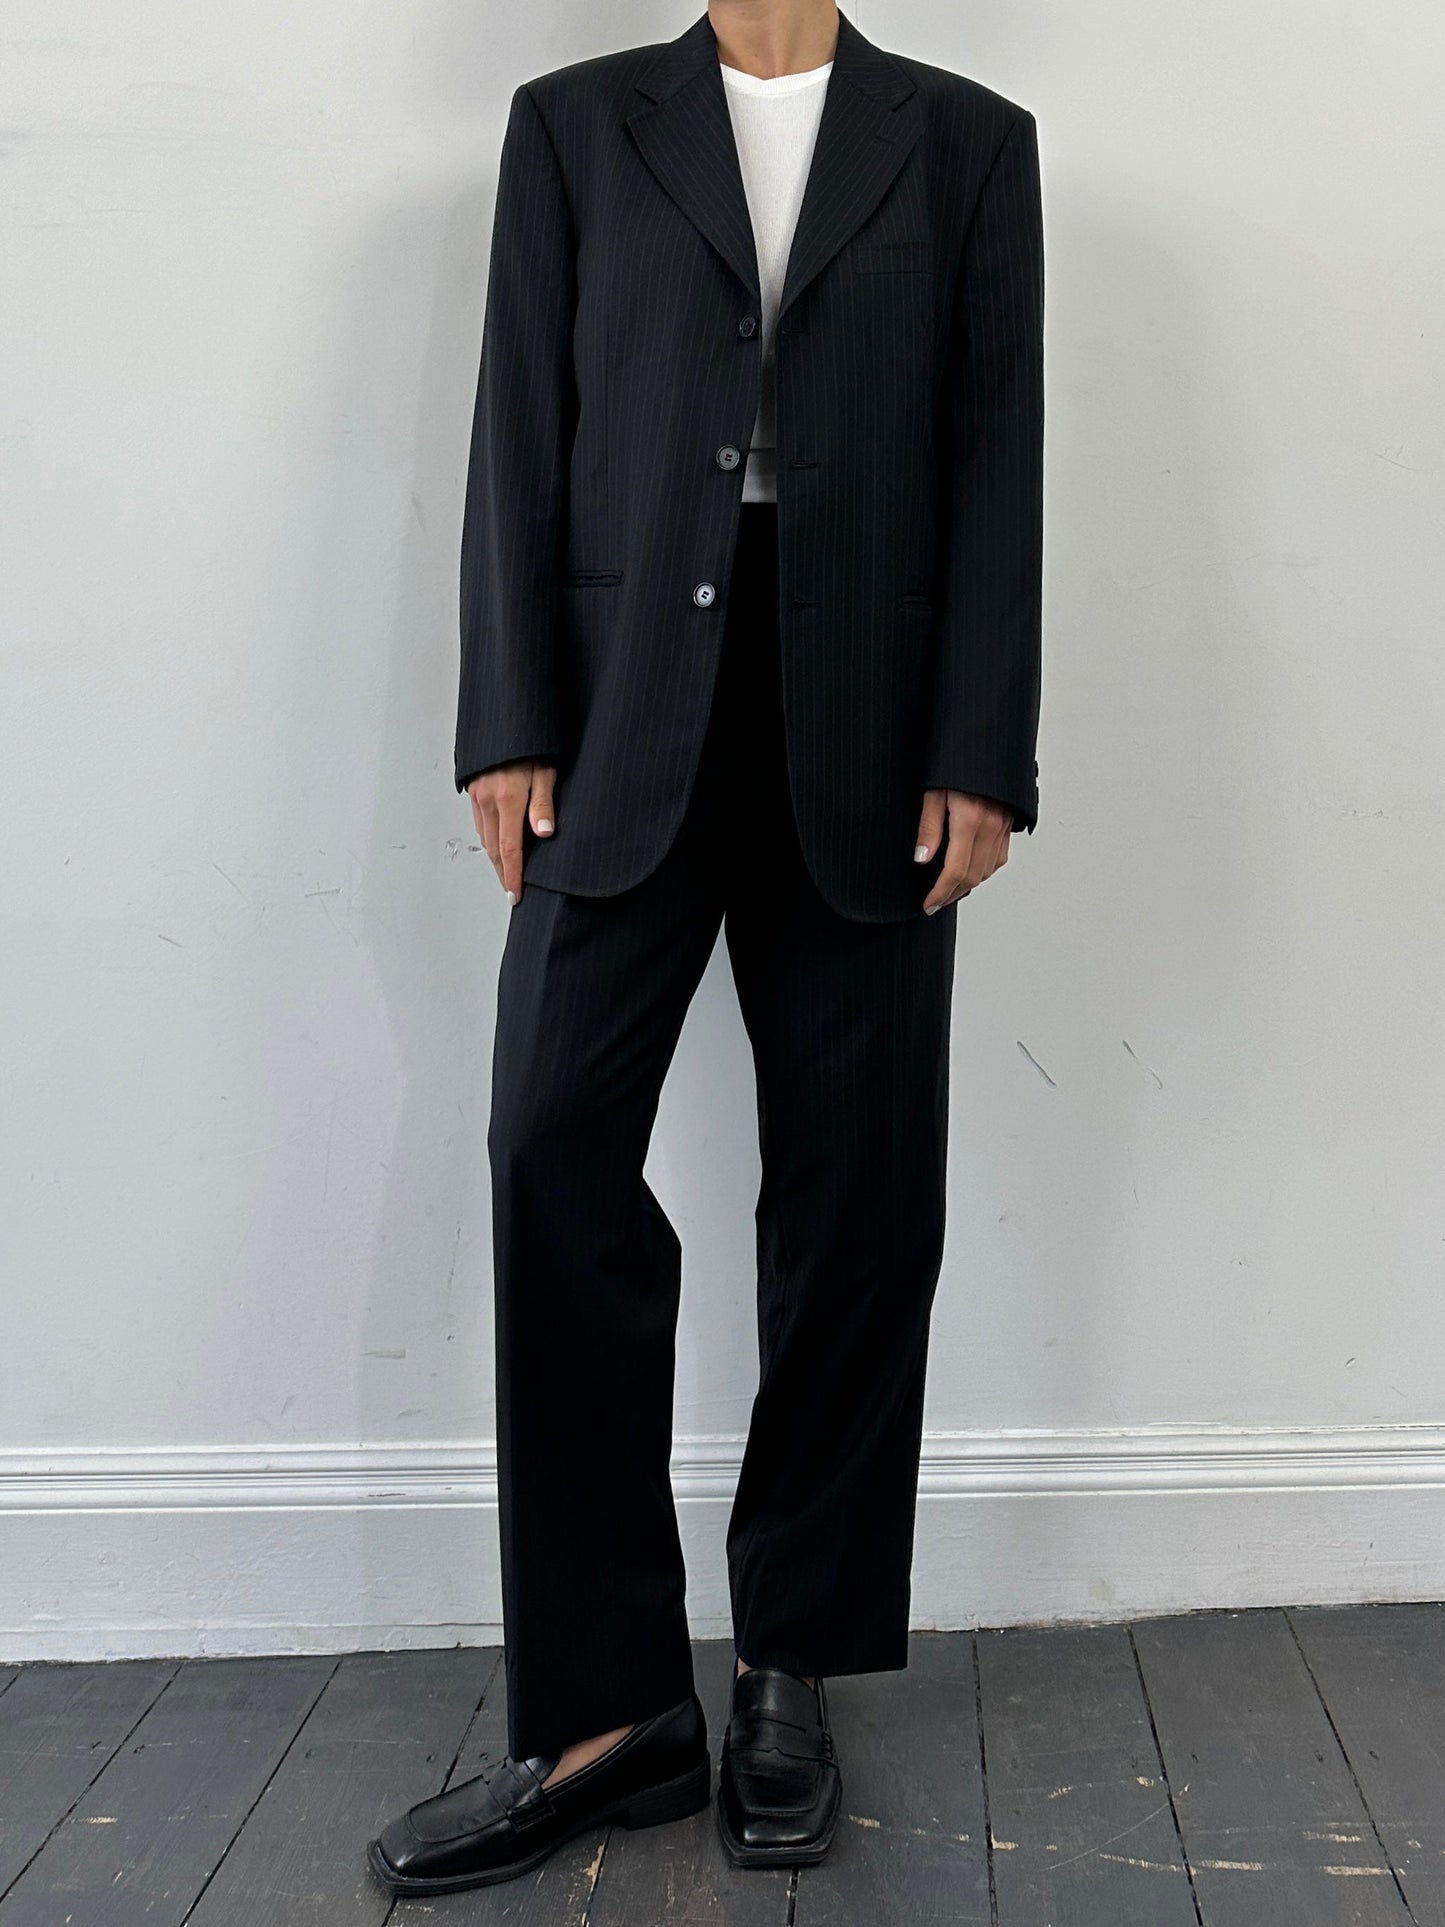 Gianfranco Ferre Pinstripe Pure Wool Single Breasted Suit - 42R/W36